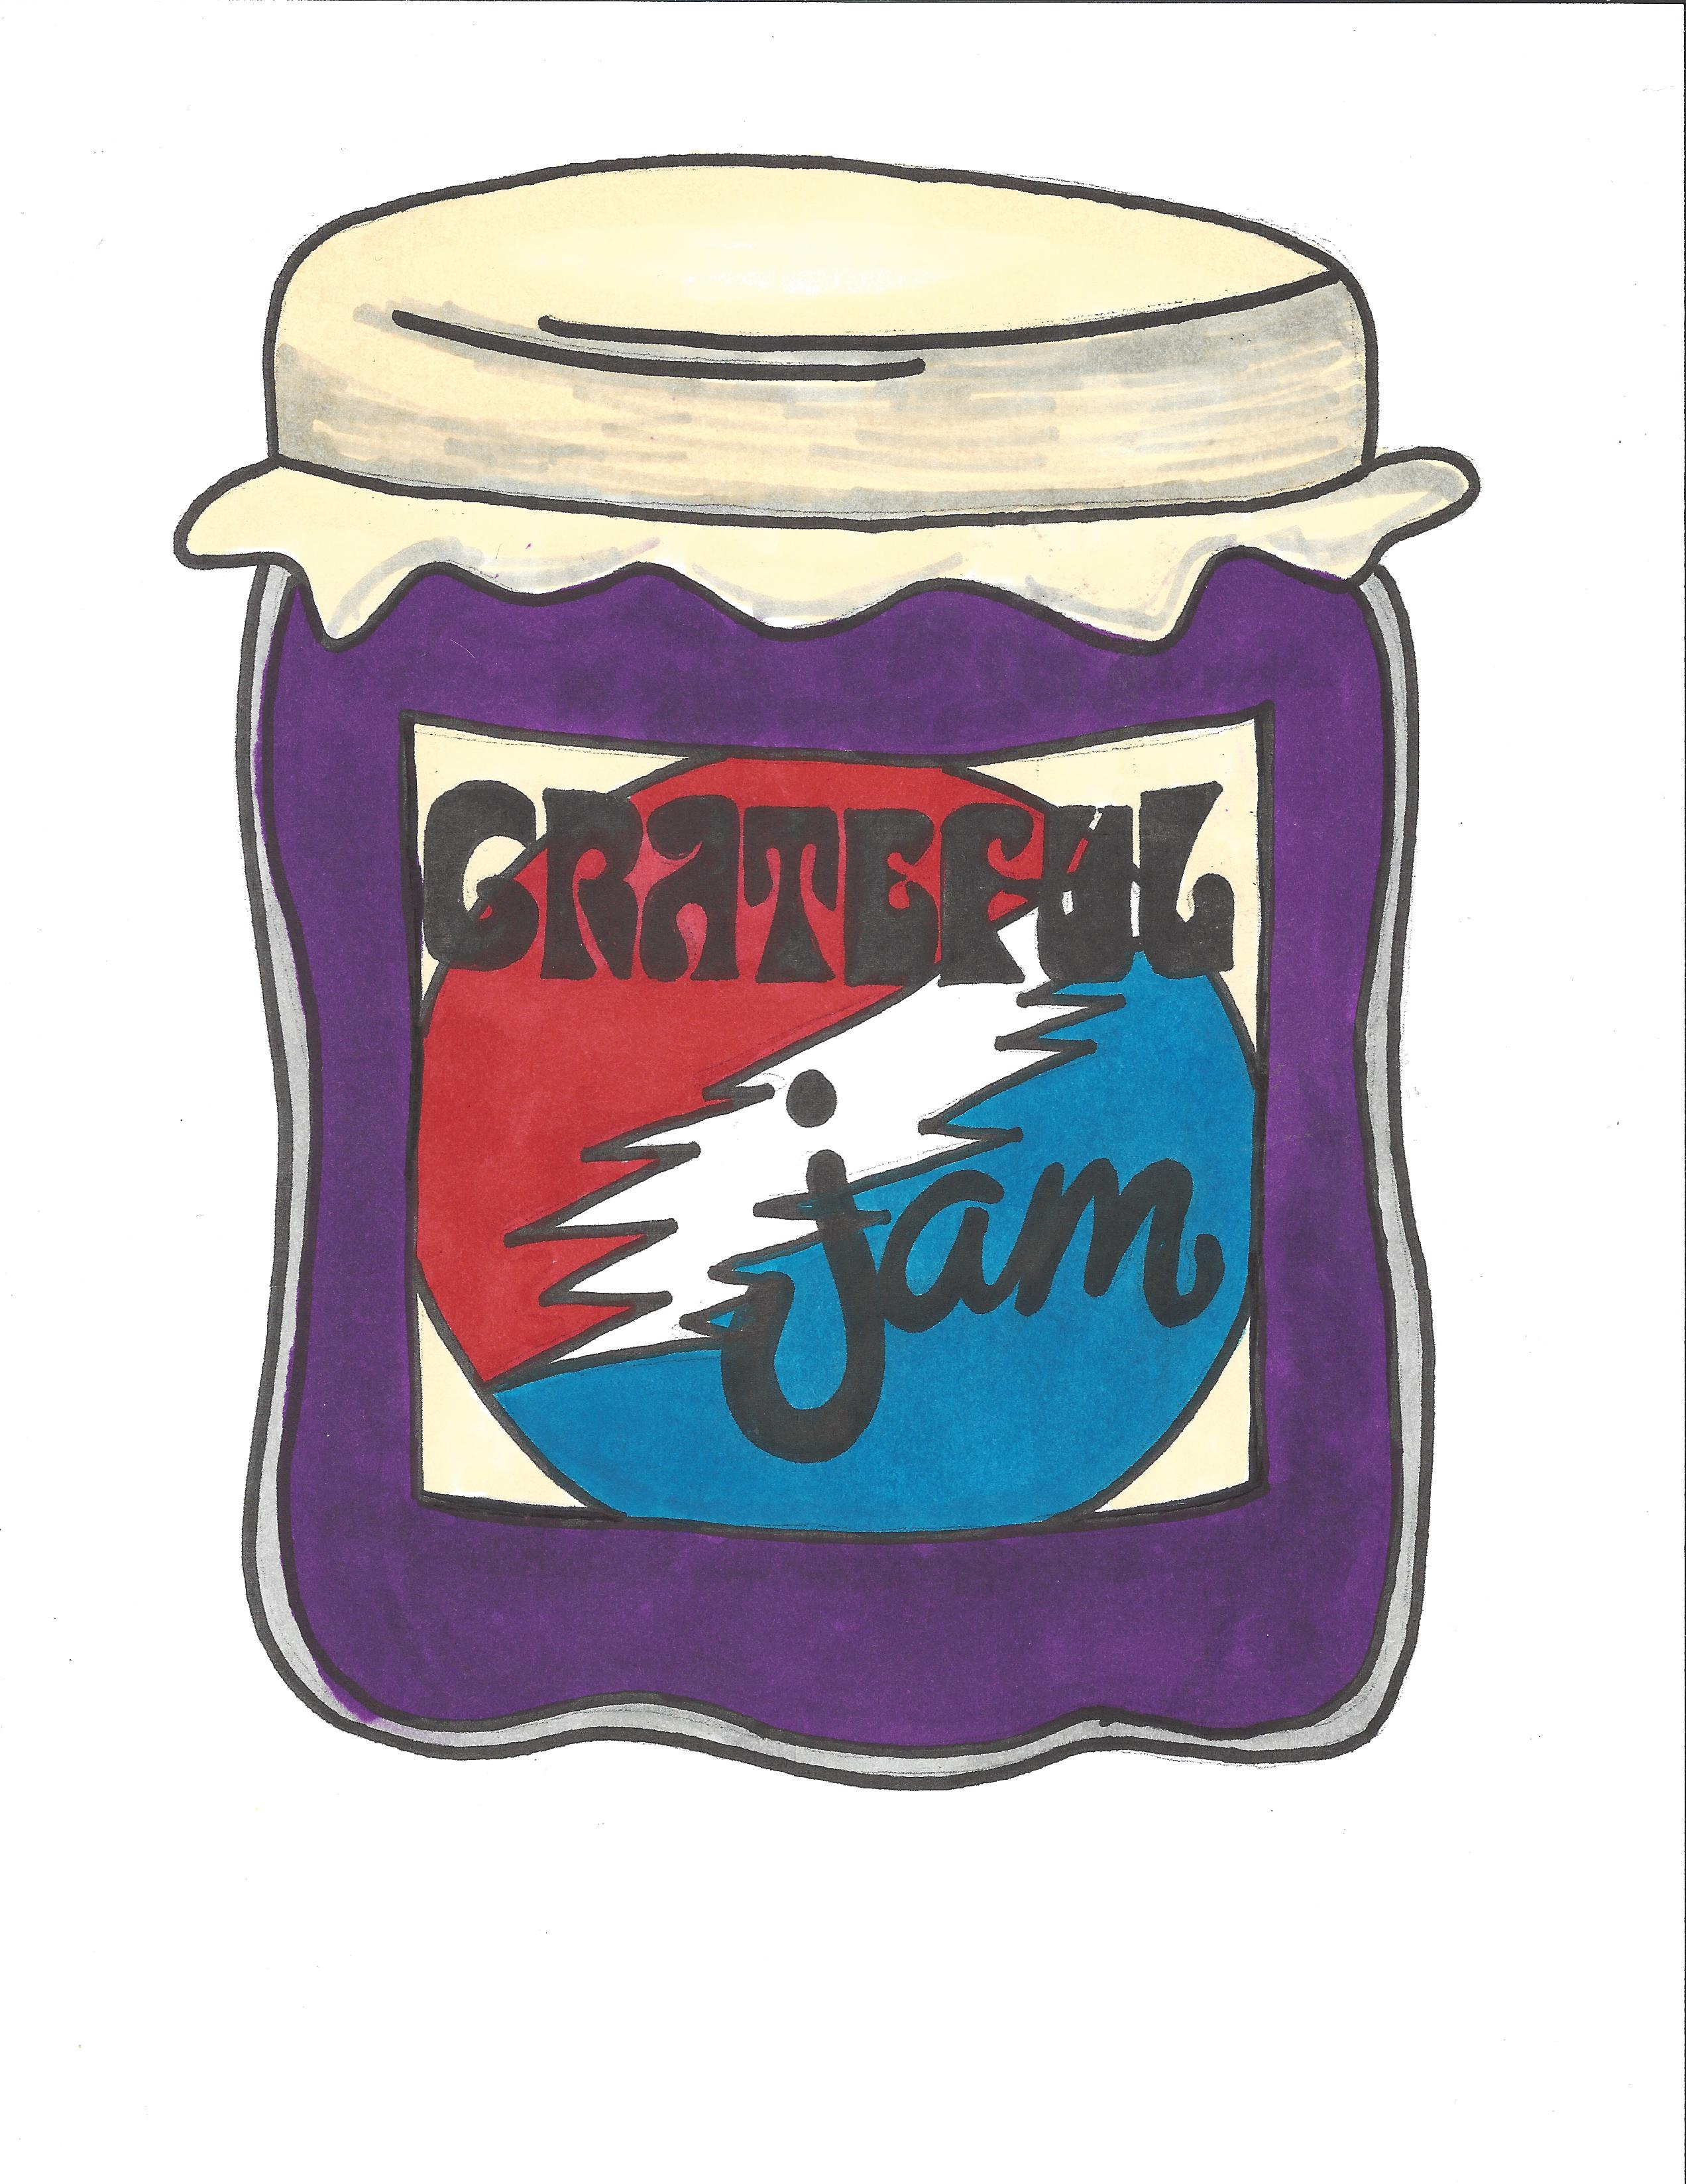 Art for Listening to Grateful Jam ID22 by Grateful Jam Radio